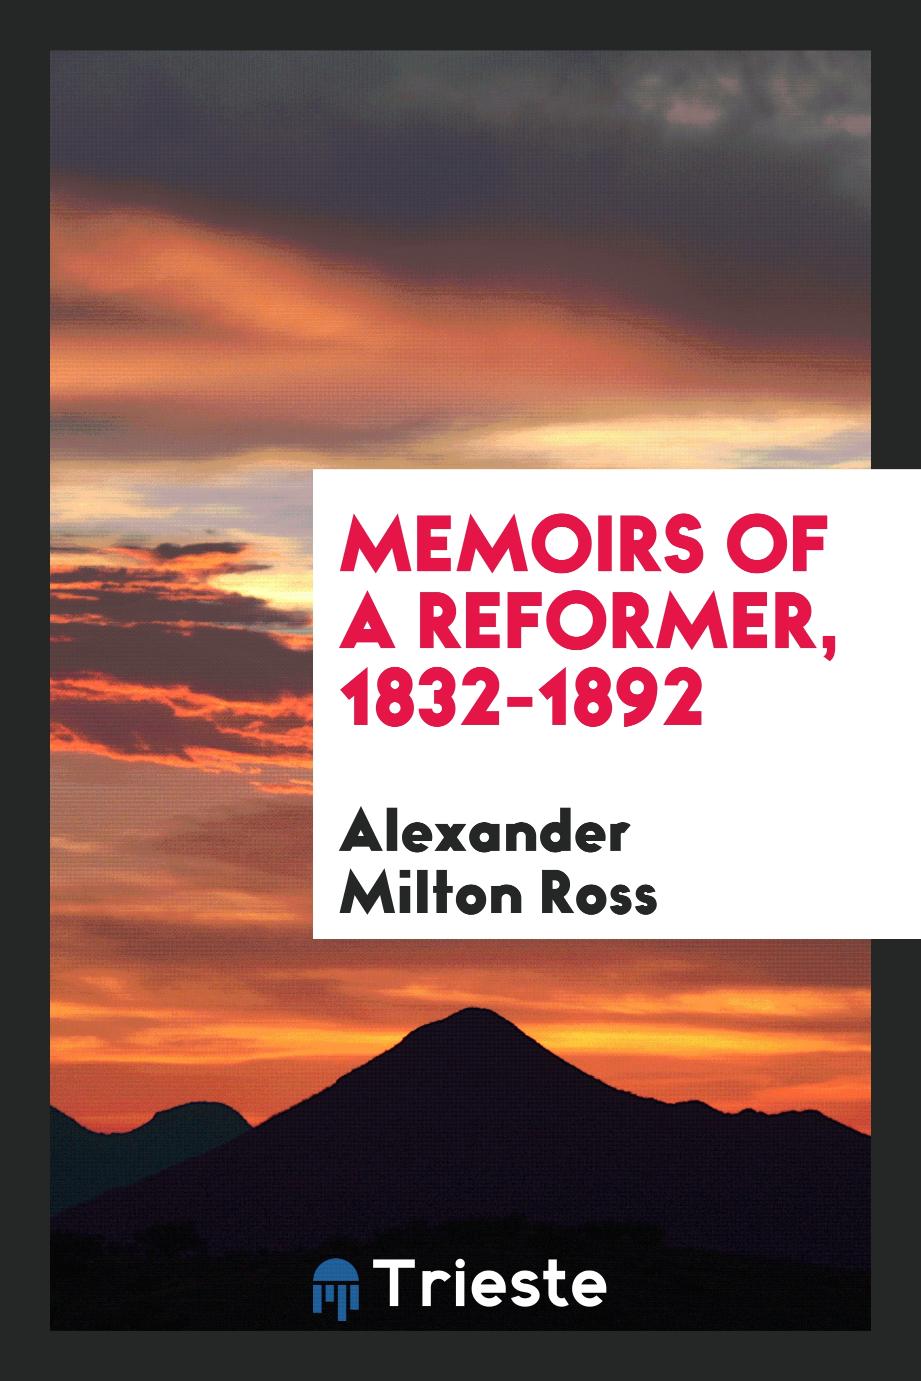 Memoirs of a reformer, 1832-1892